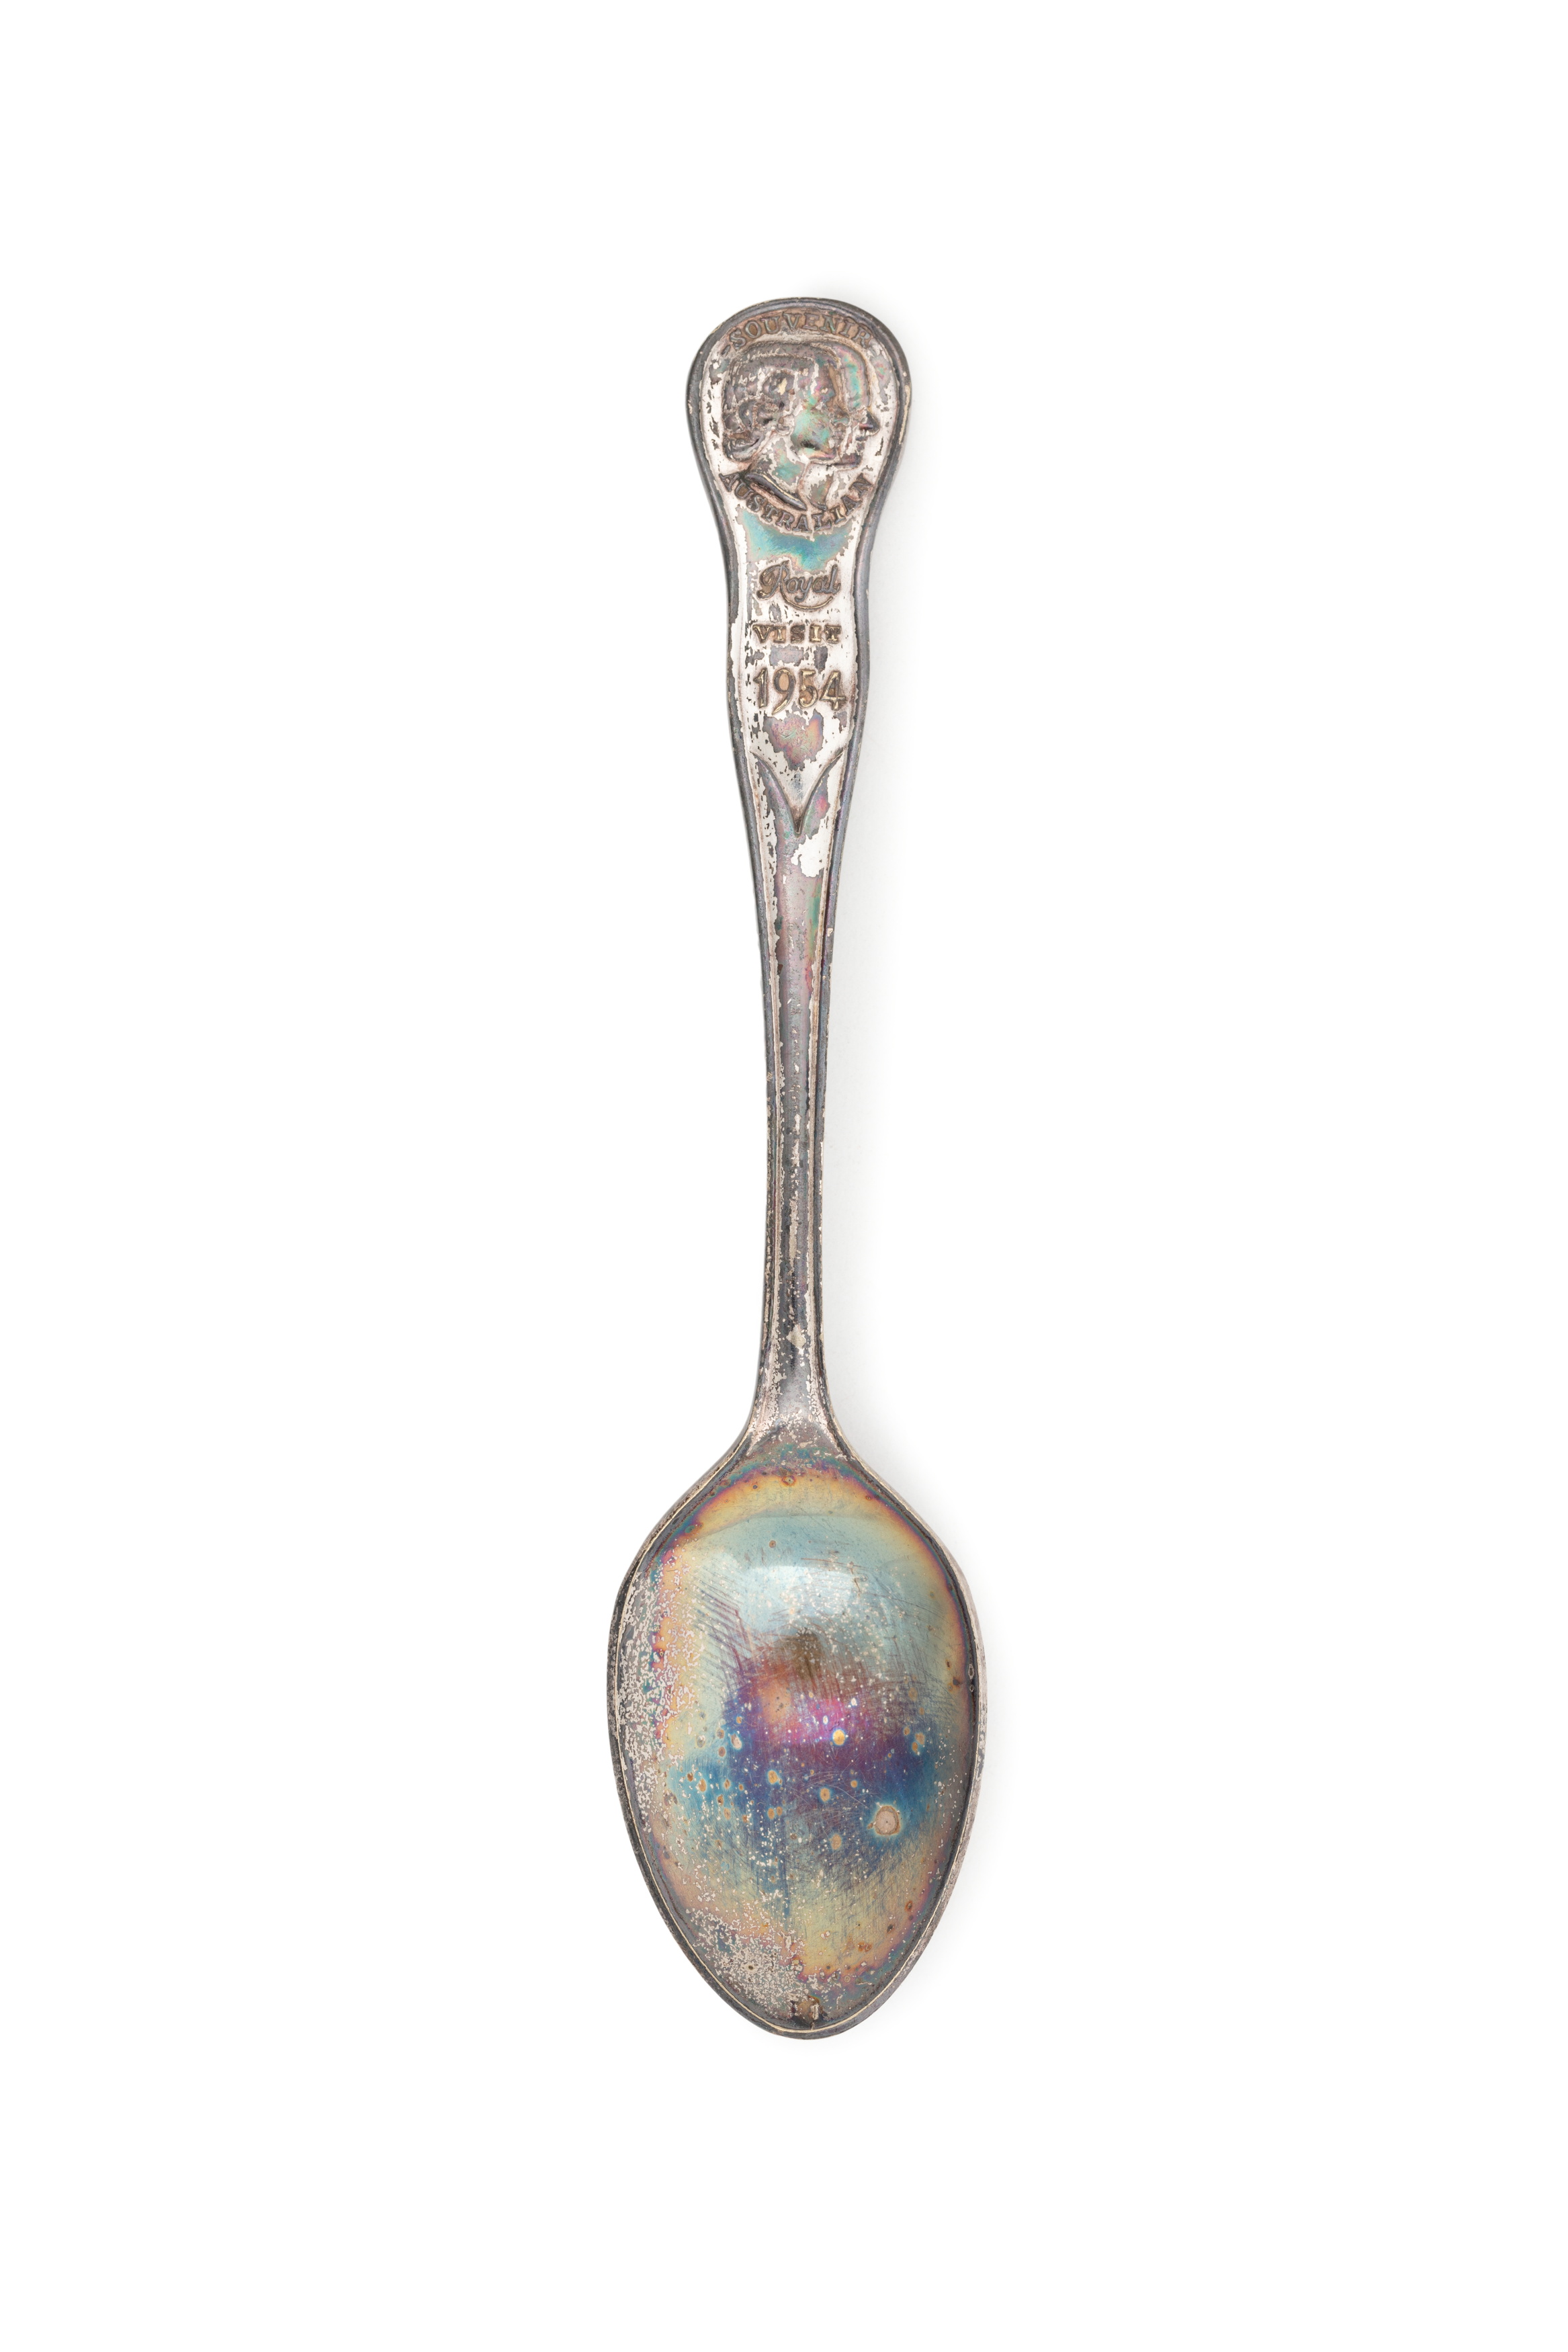 Souvenir teaspoon of the Royal Visit